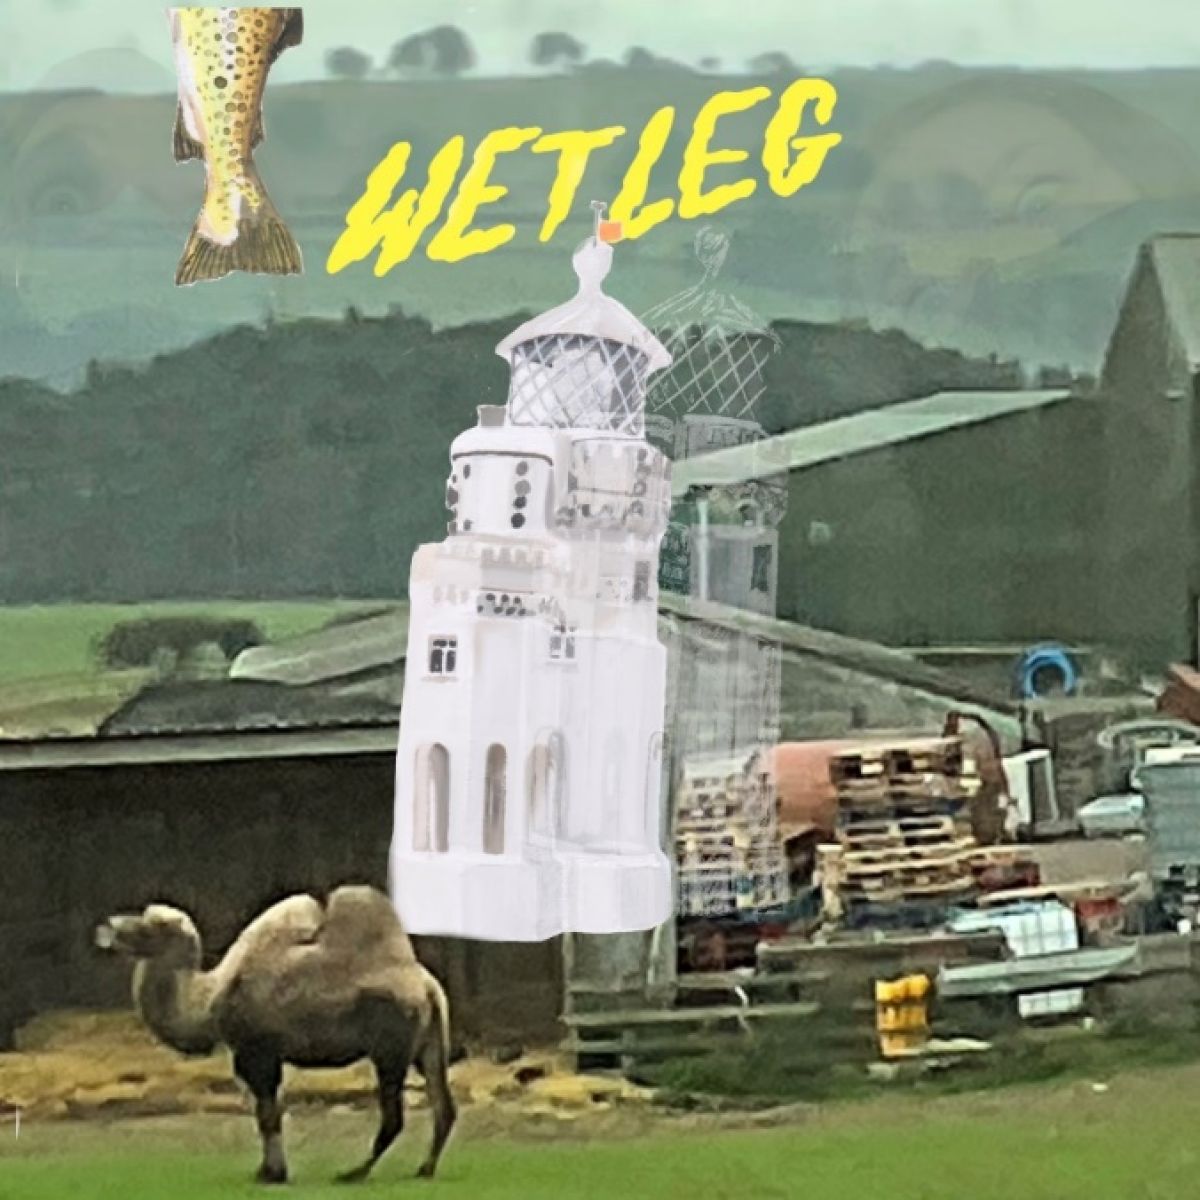 Angelica – Wet Leg’s newest single